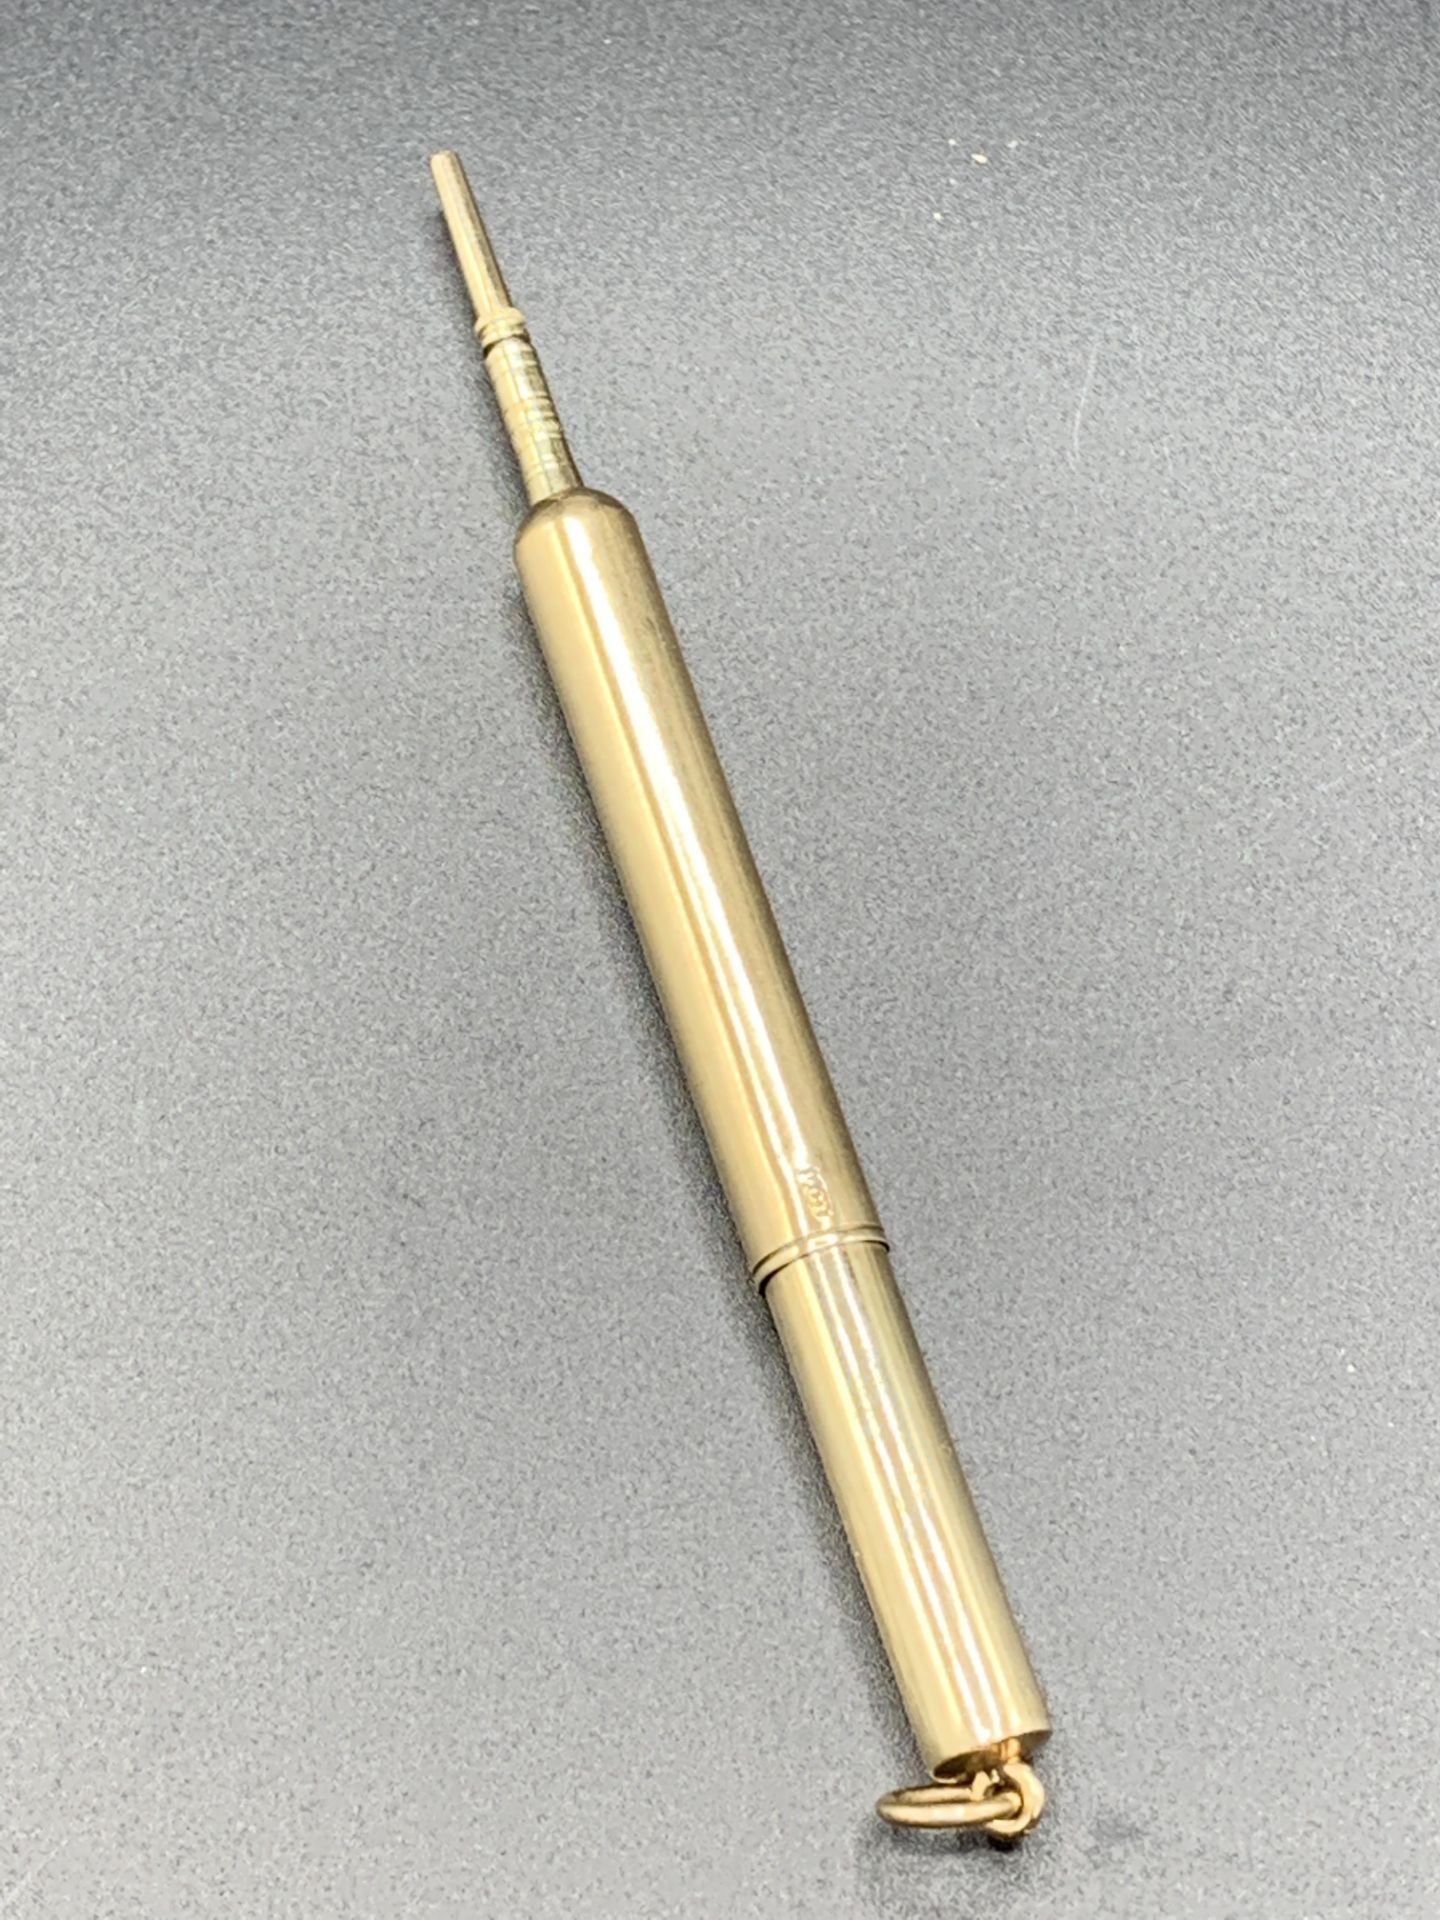 9ct gold telescope pencil - Image 2 of 3